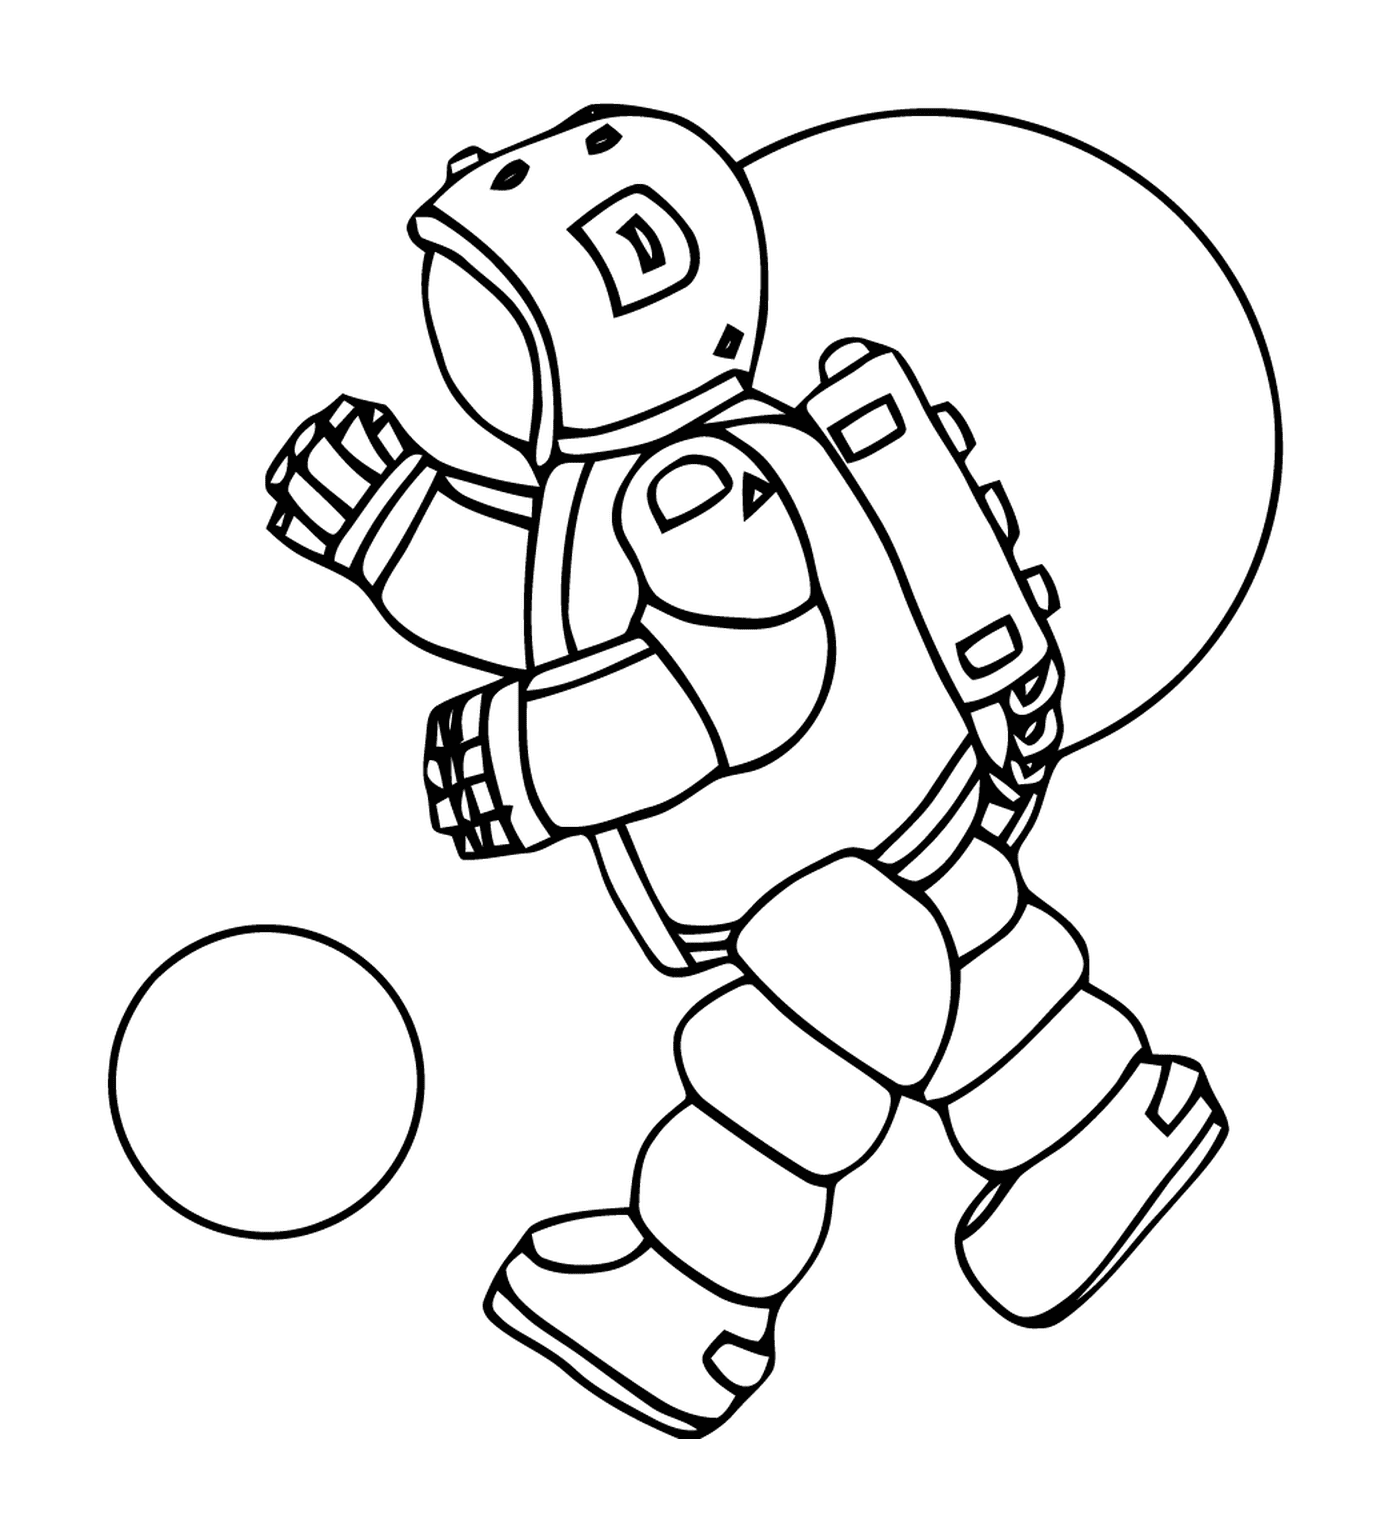  Astronauta jugando con una pelota 